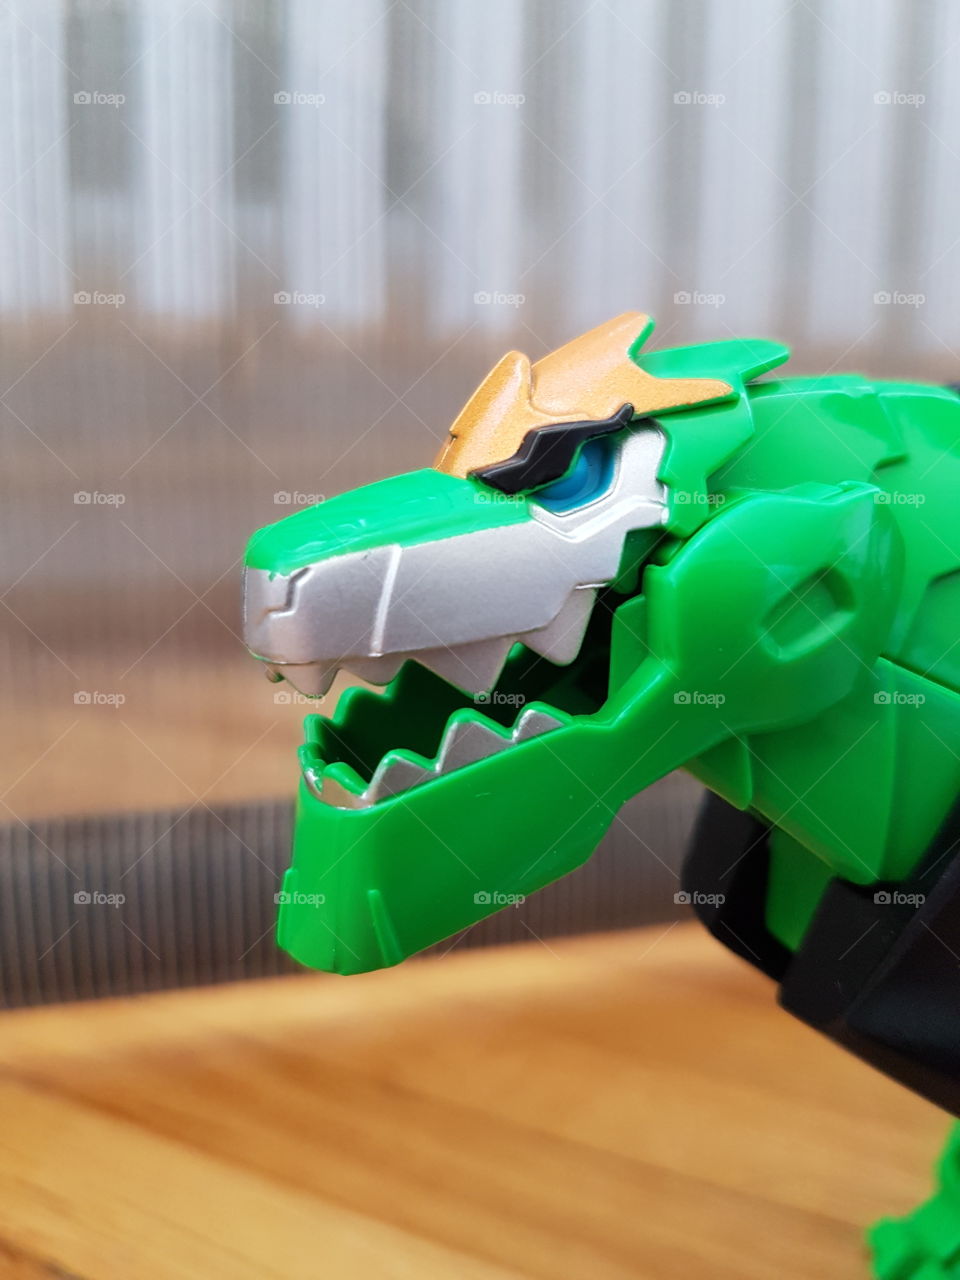 transformers greenlock toy